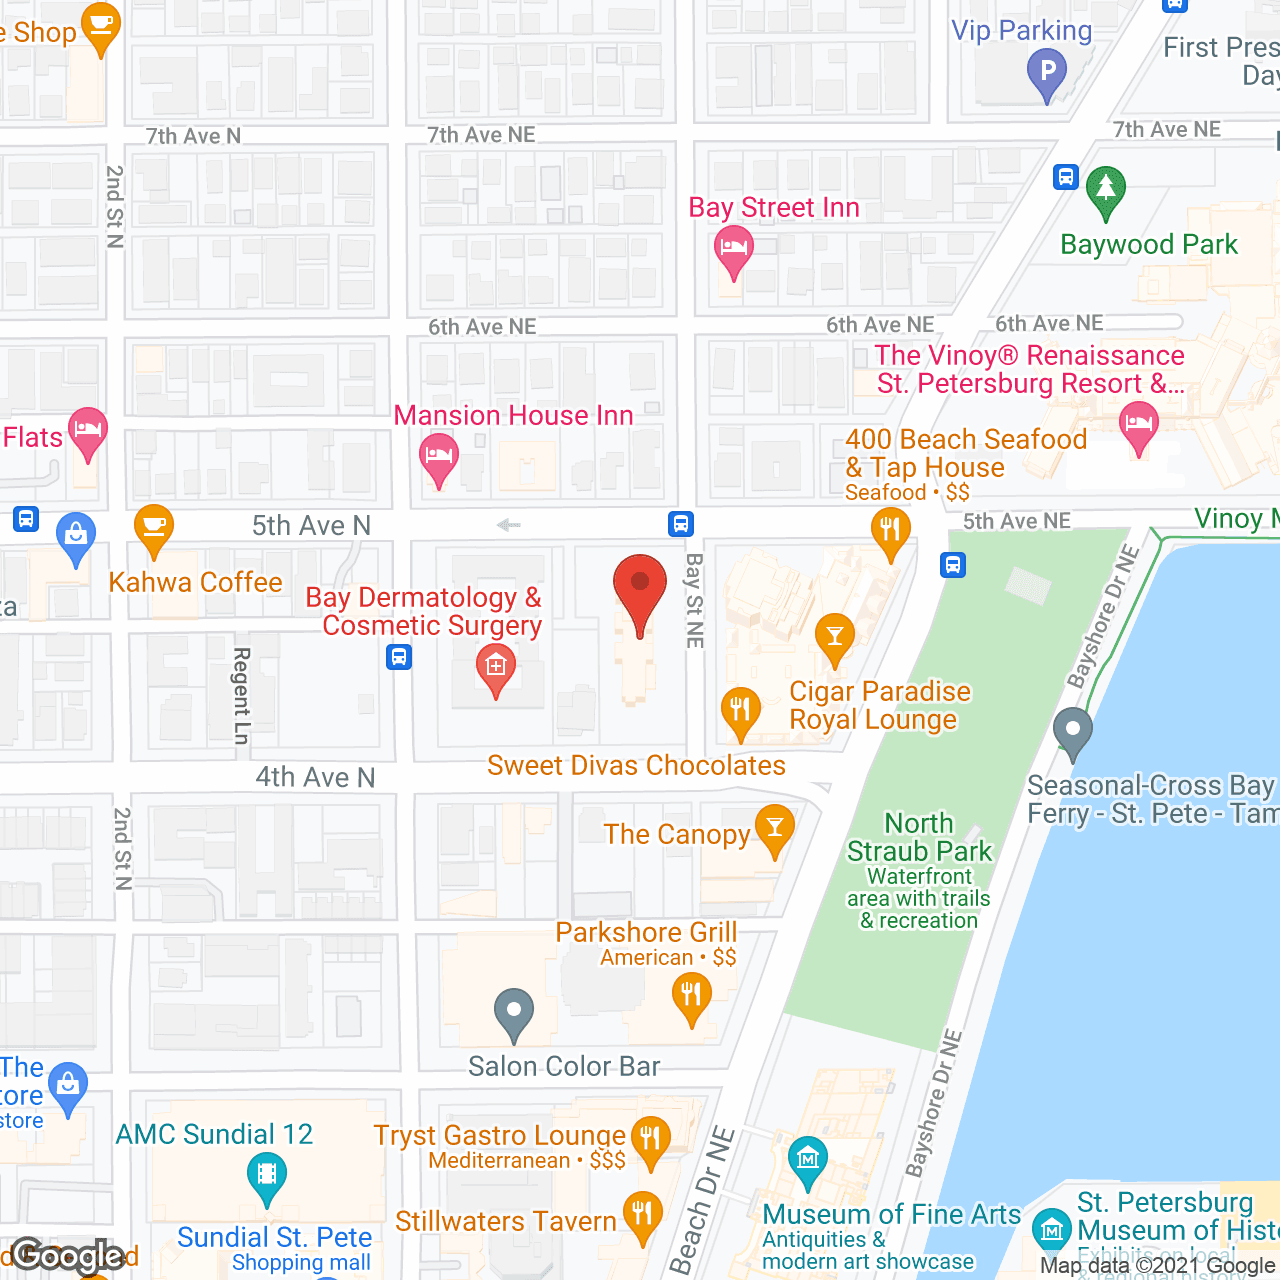 Presbyterian Towers Inc in google map